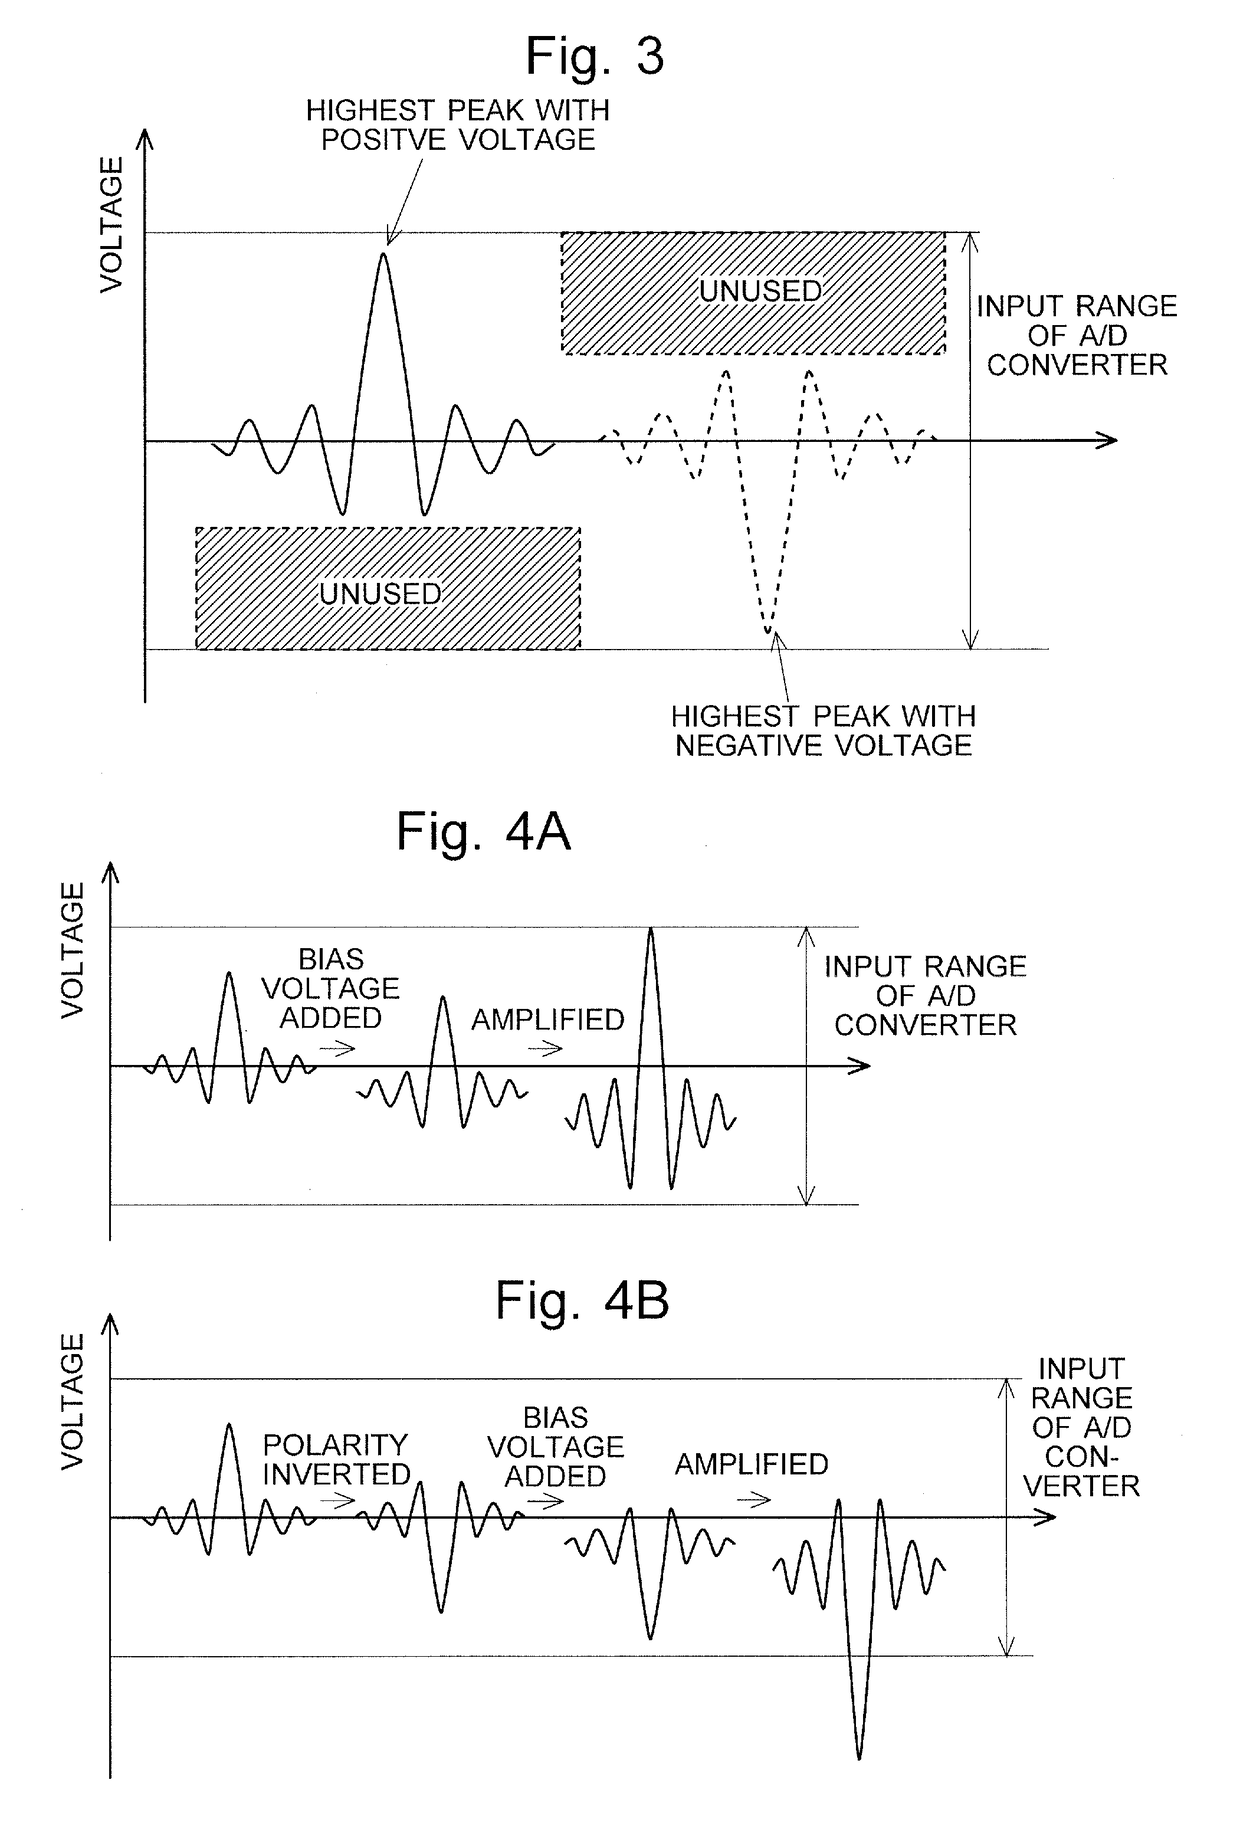 Fourier transform infrared spectrophotometer